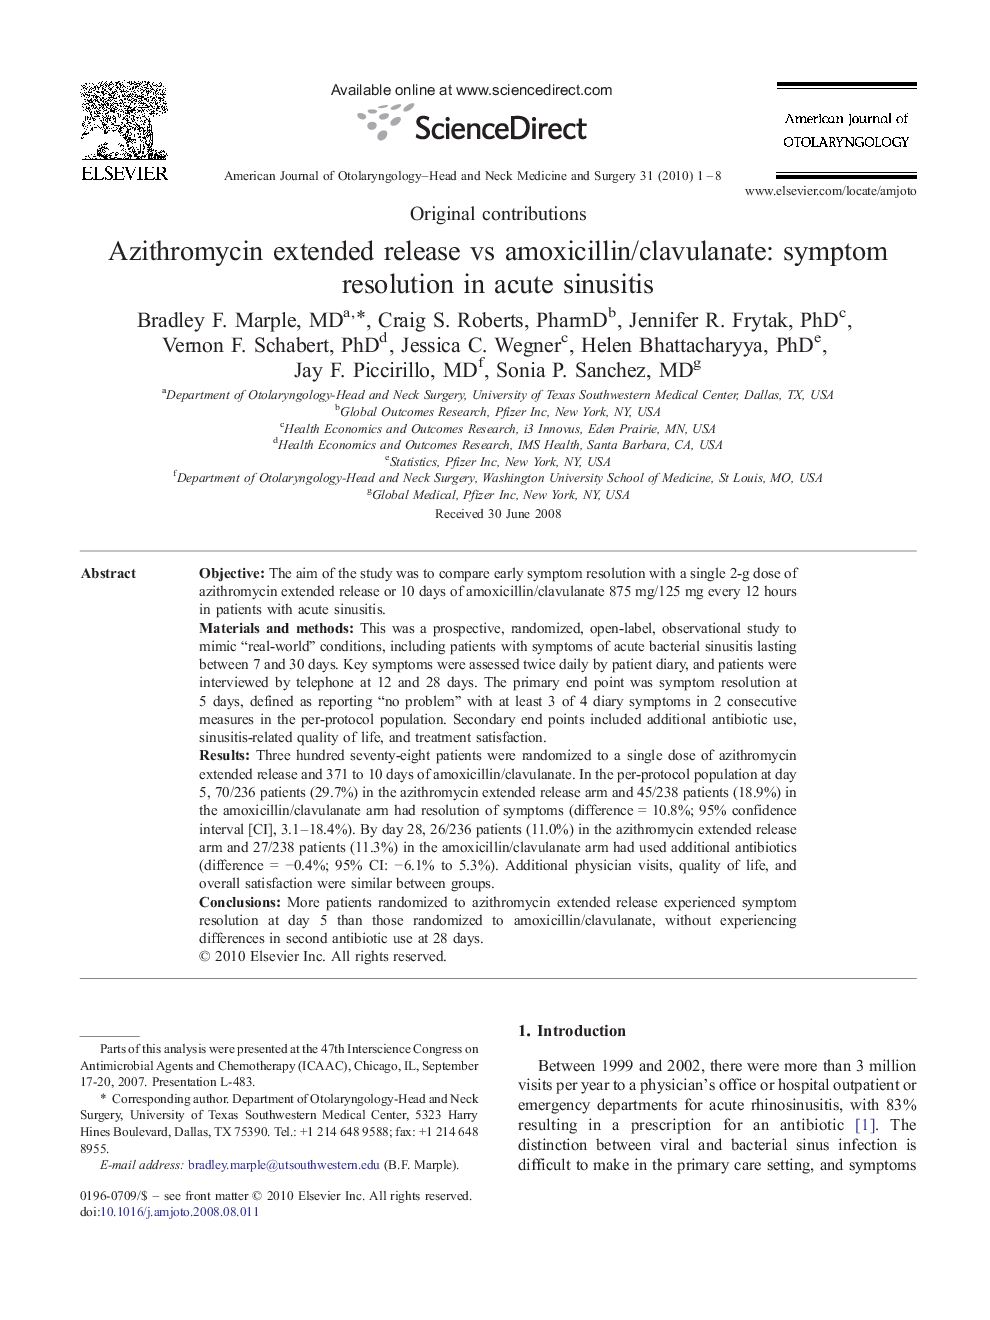 Azithromycin extended release vs amoxicillin/clavulanate: symptom resolution in acute sinusitis 